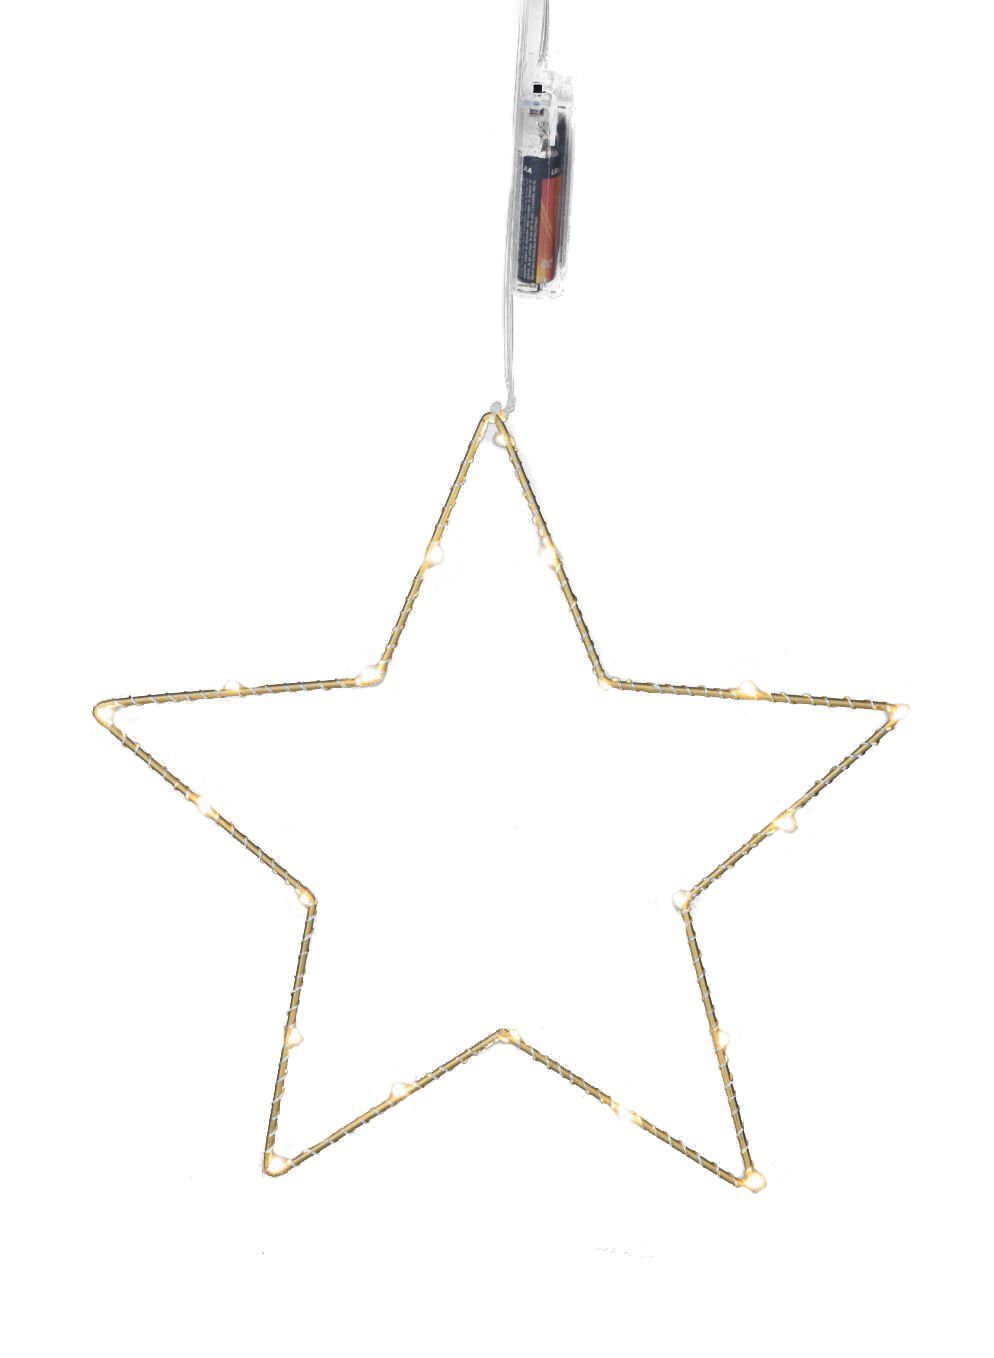 Spetebo LED-Girlande Beleuchteter Stern mit 20 LED - Ø 29,5 cm - gold, mit 20 warmweißen LED